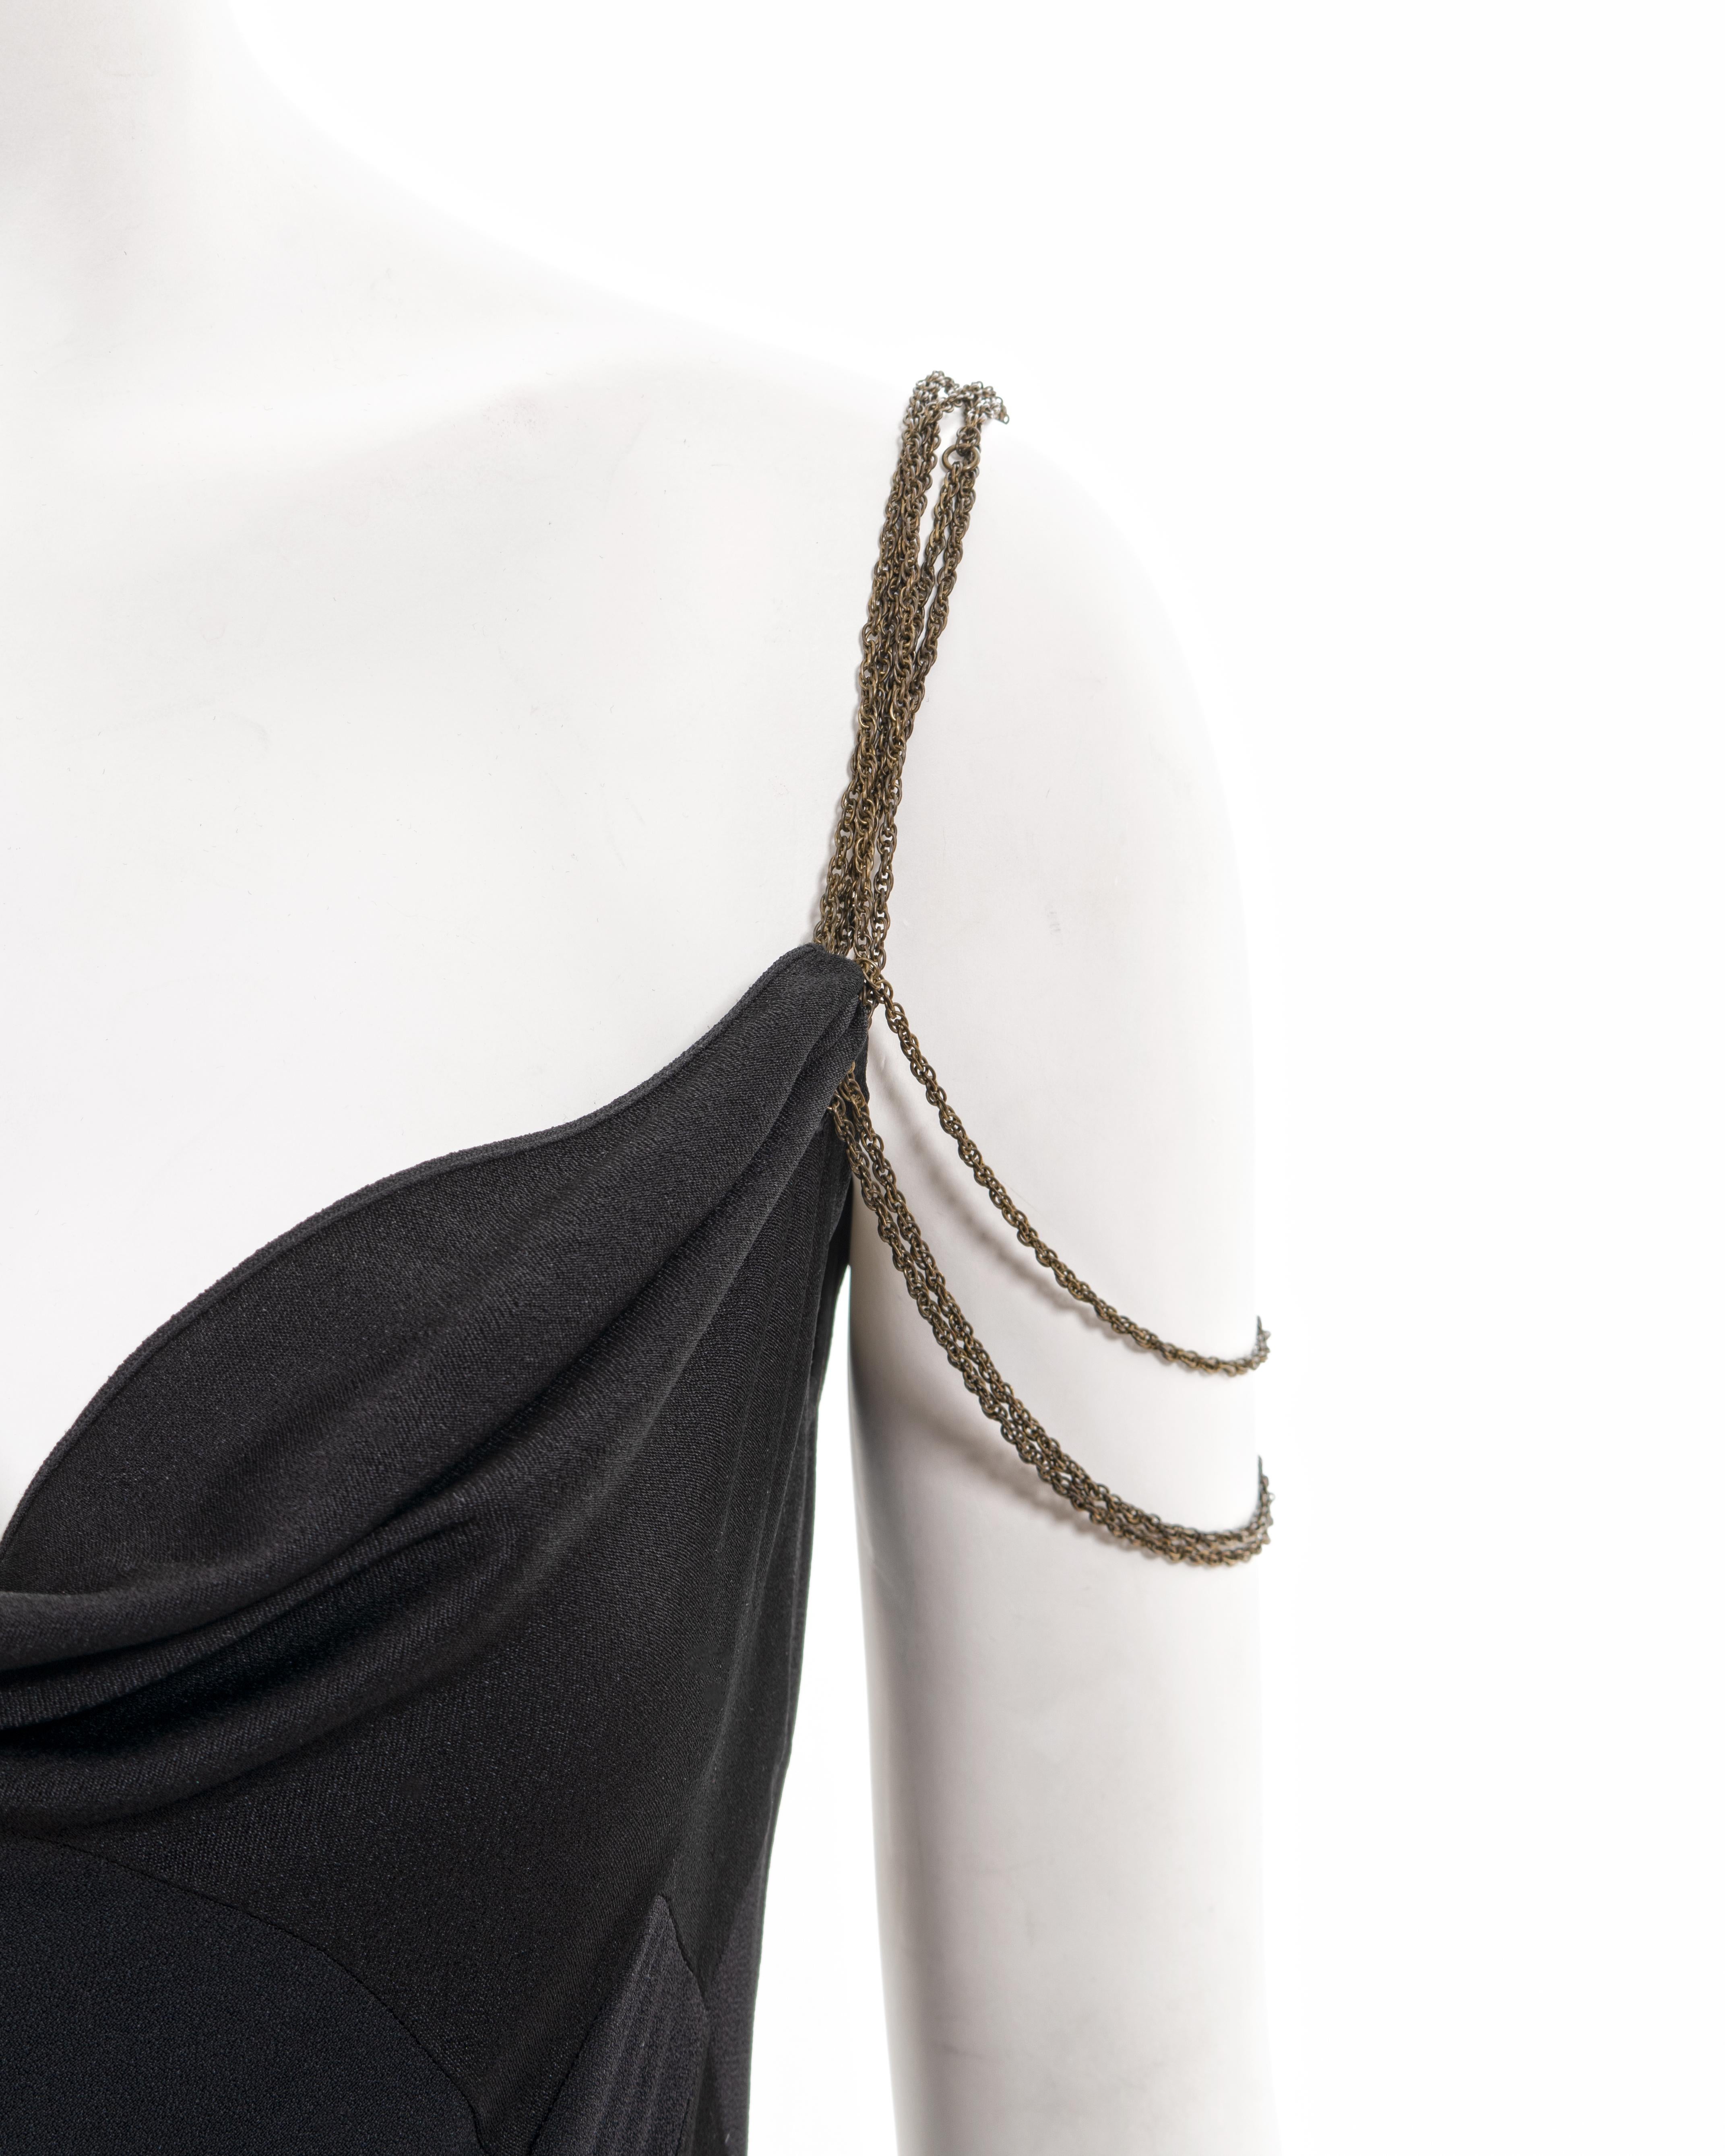 Women's John Galliano black bias-cut satin evening dress with chain straps, ss 2002 For Sale